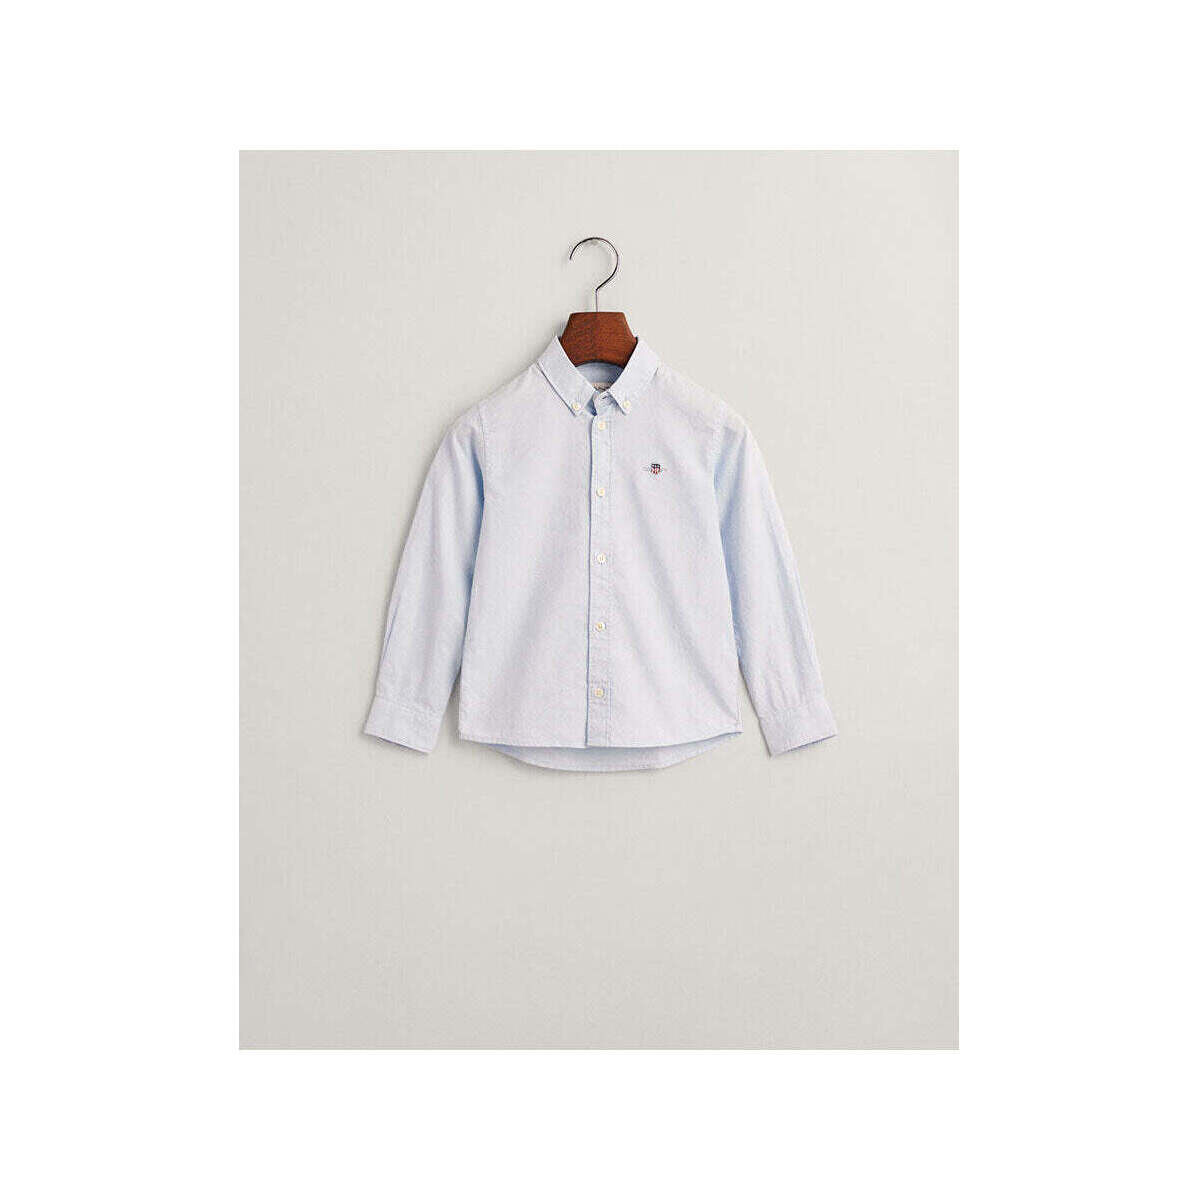 Textil Rapaz Camisas mangas comprida Gant Kids 830423-468-3-17 Azul